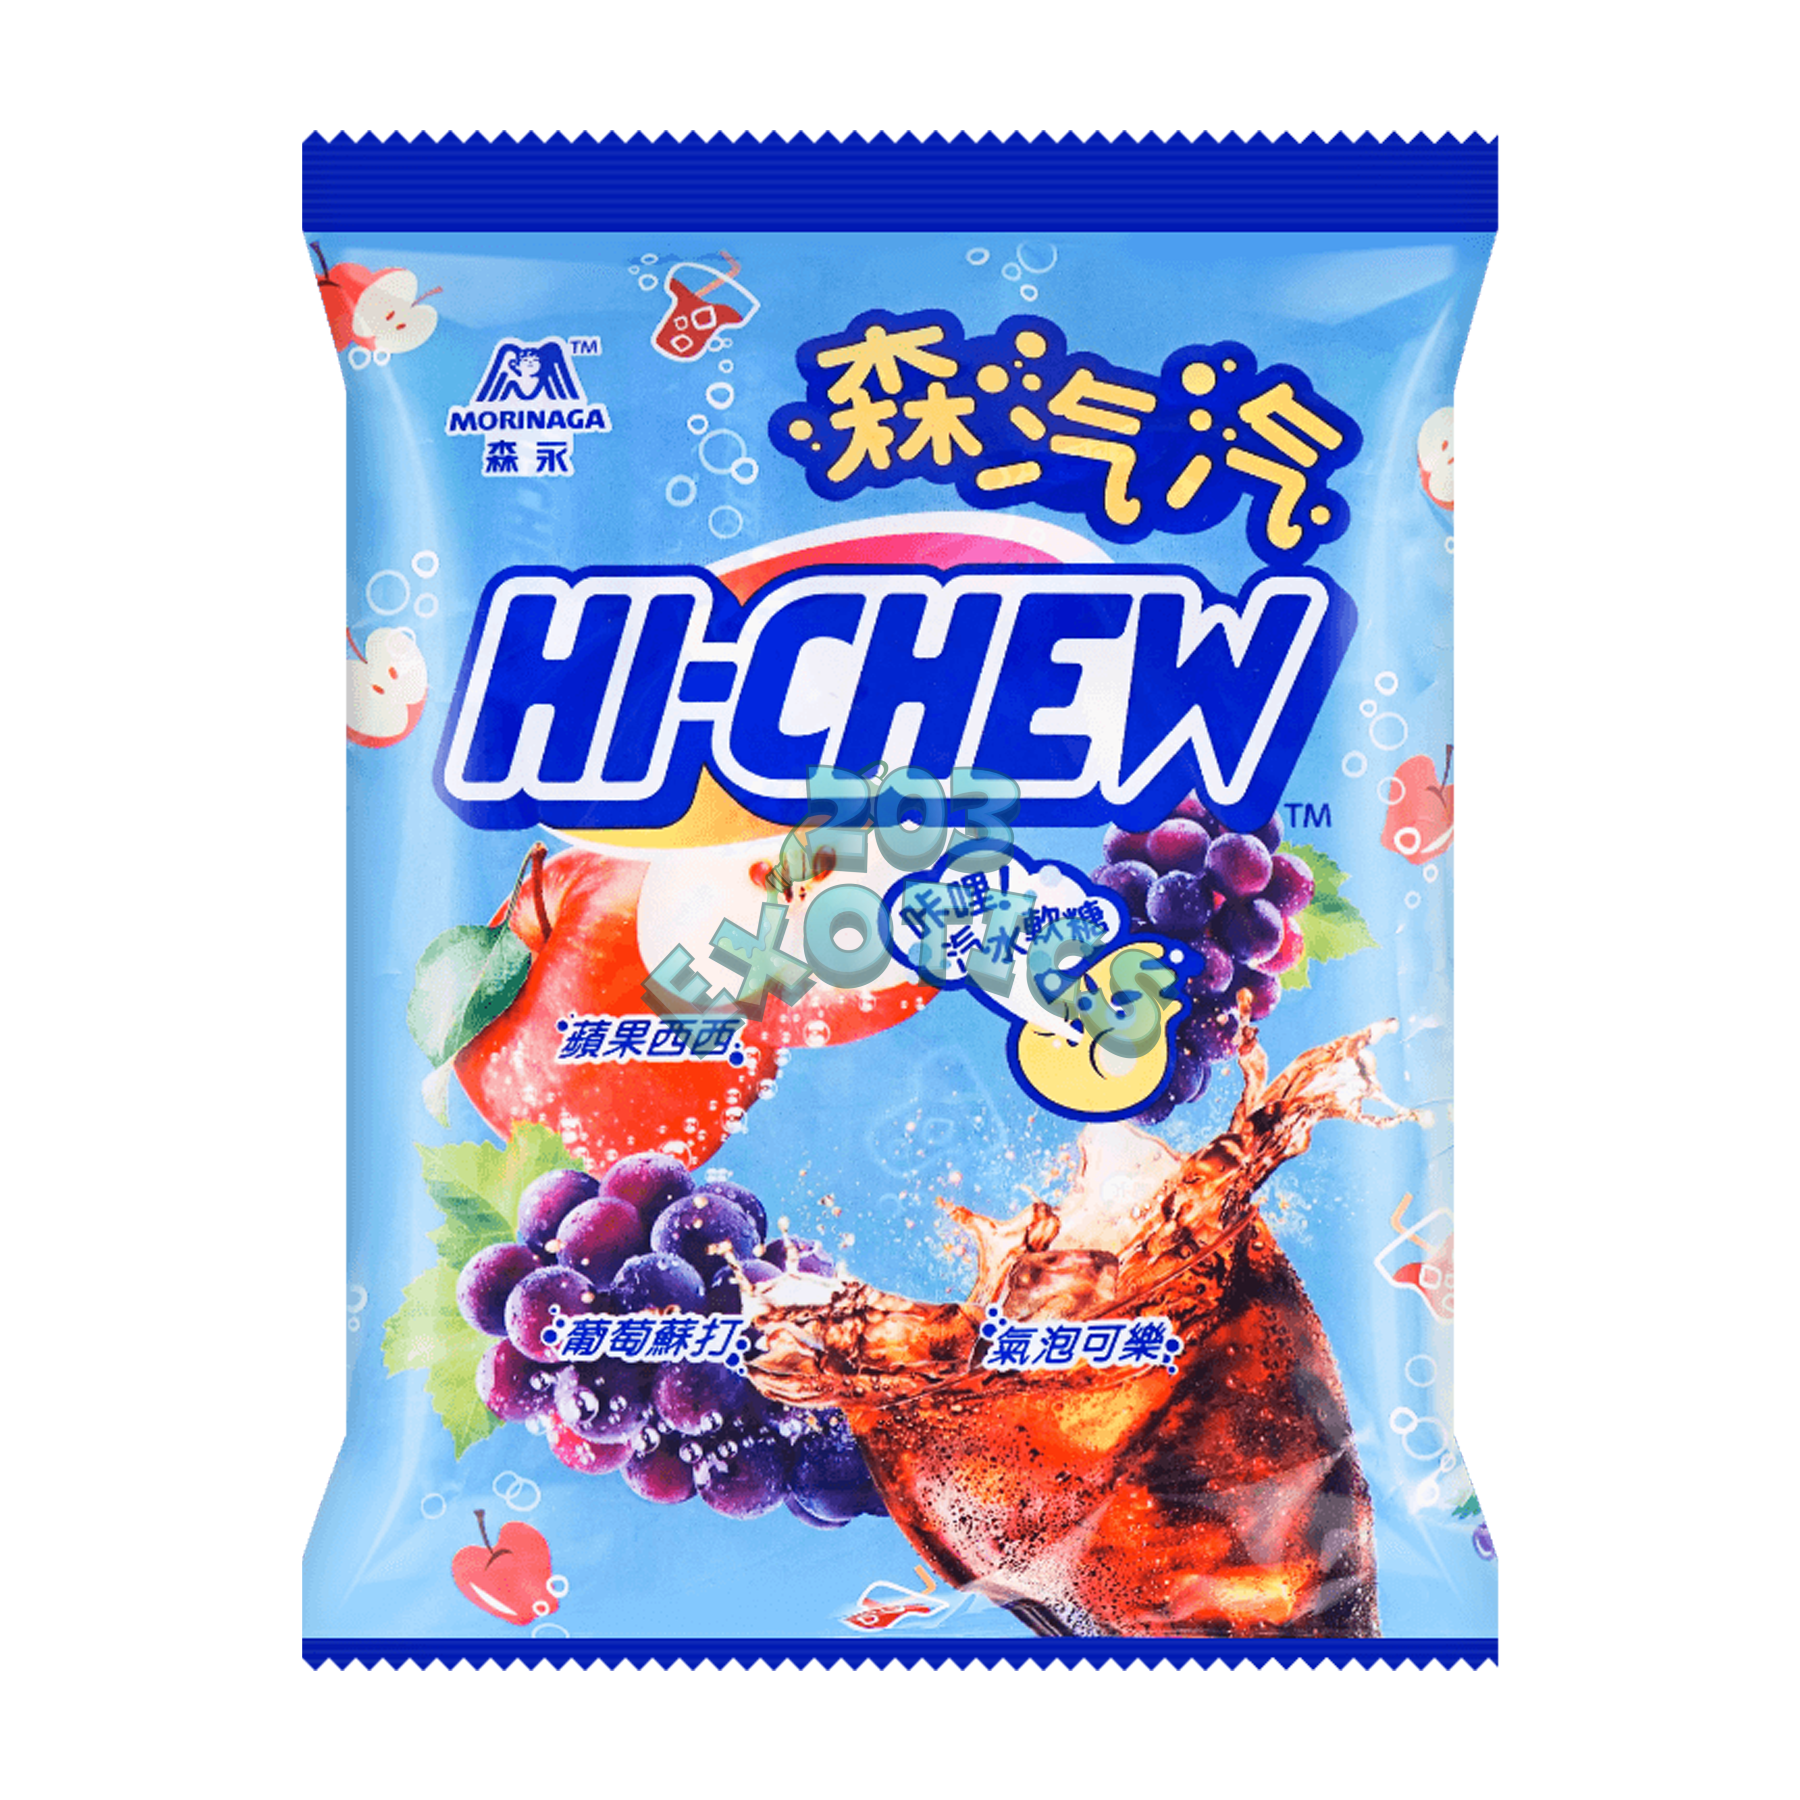 Hi-Chew Mixed Candy Flavor (110G)